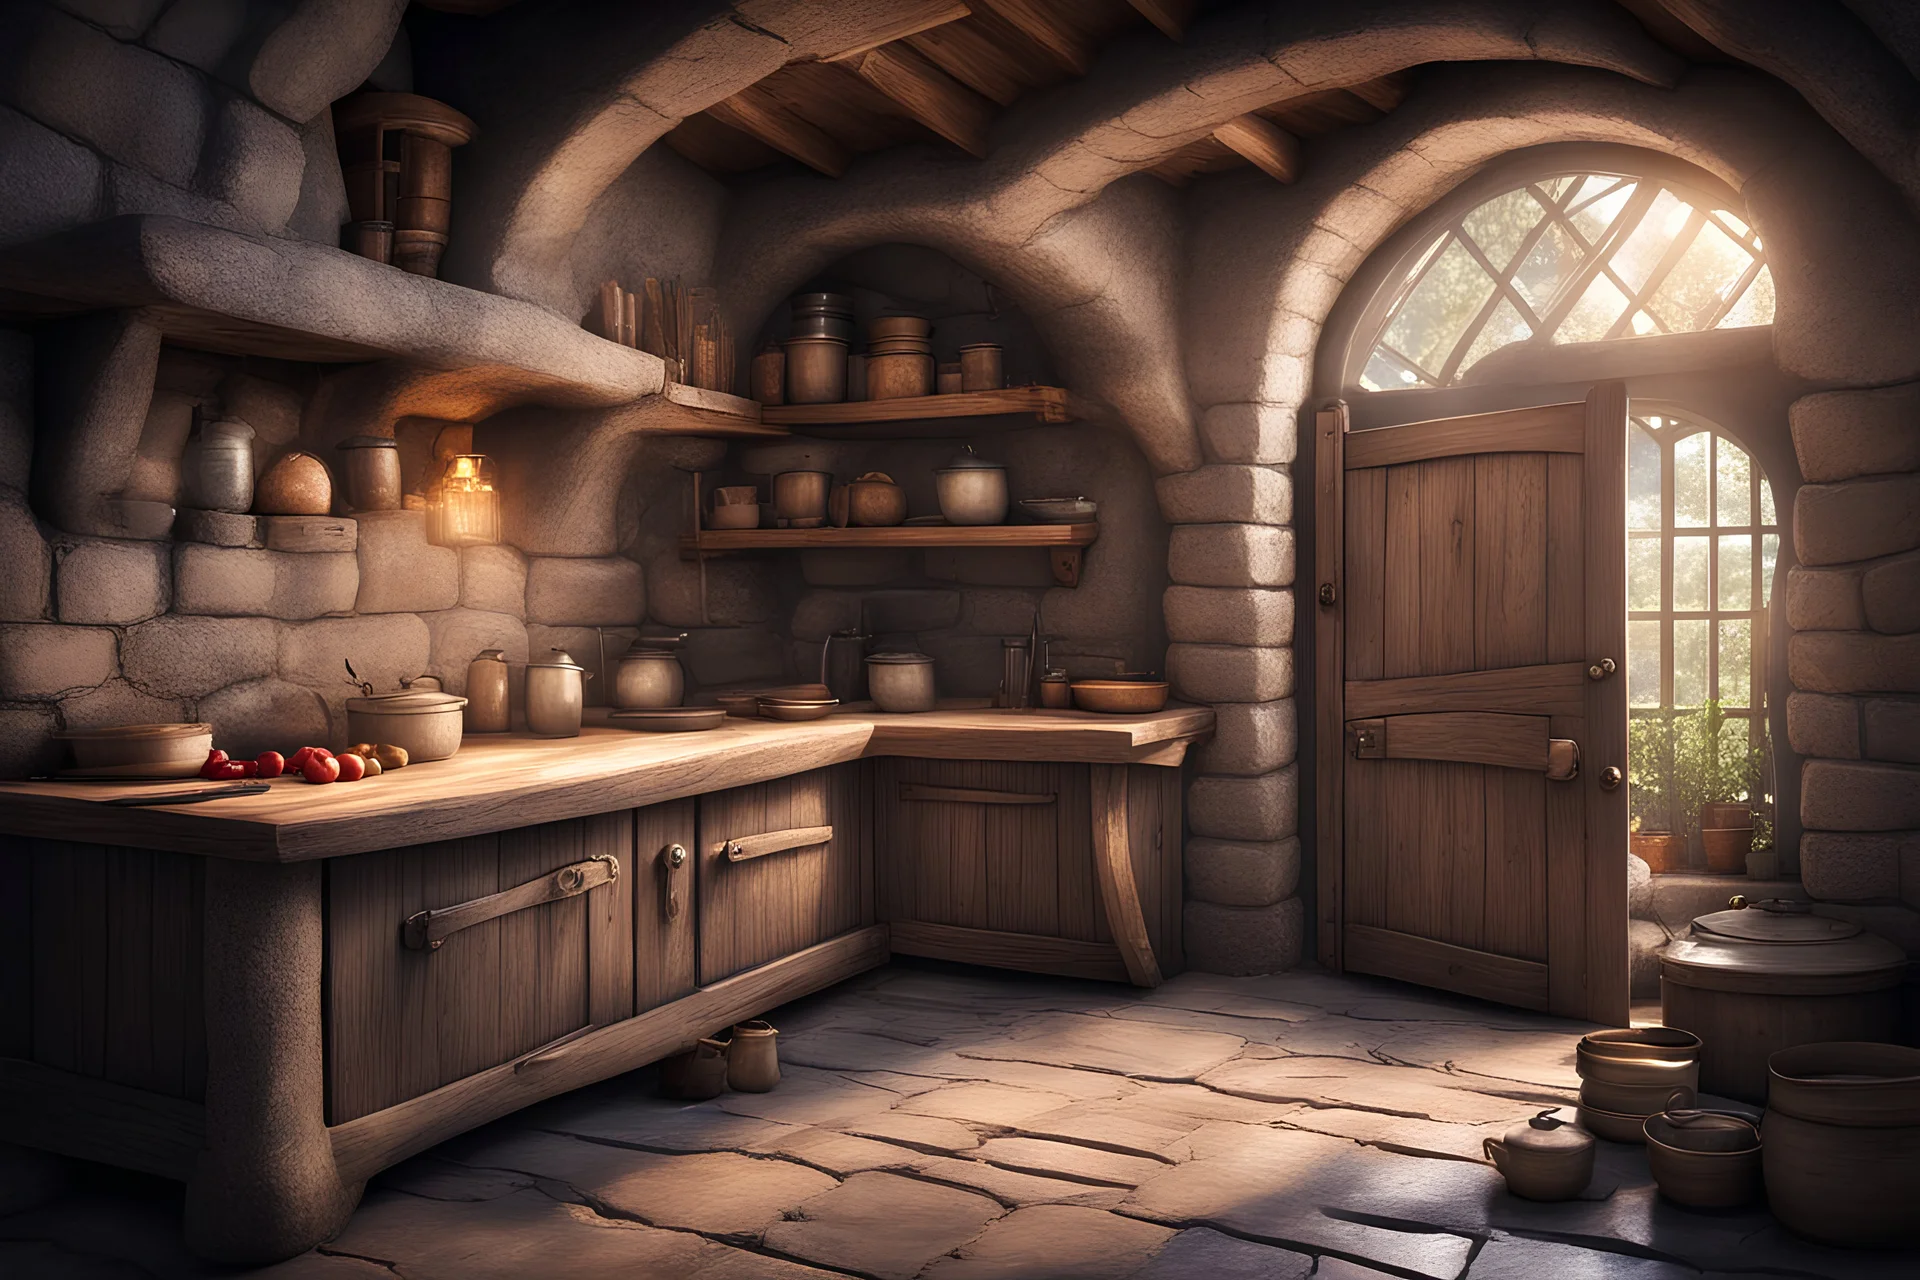 fantasy medieval kitchen with an open door